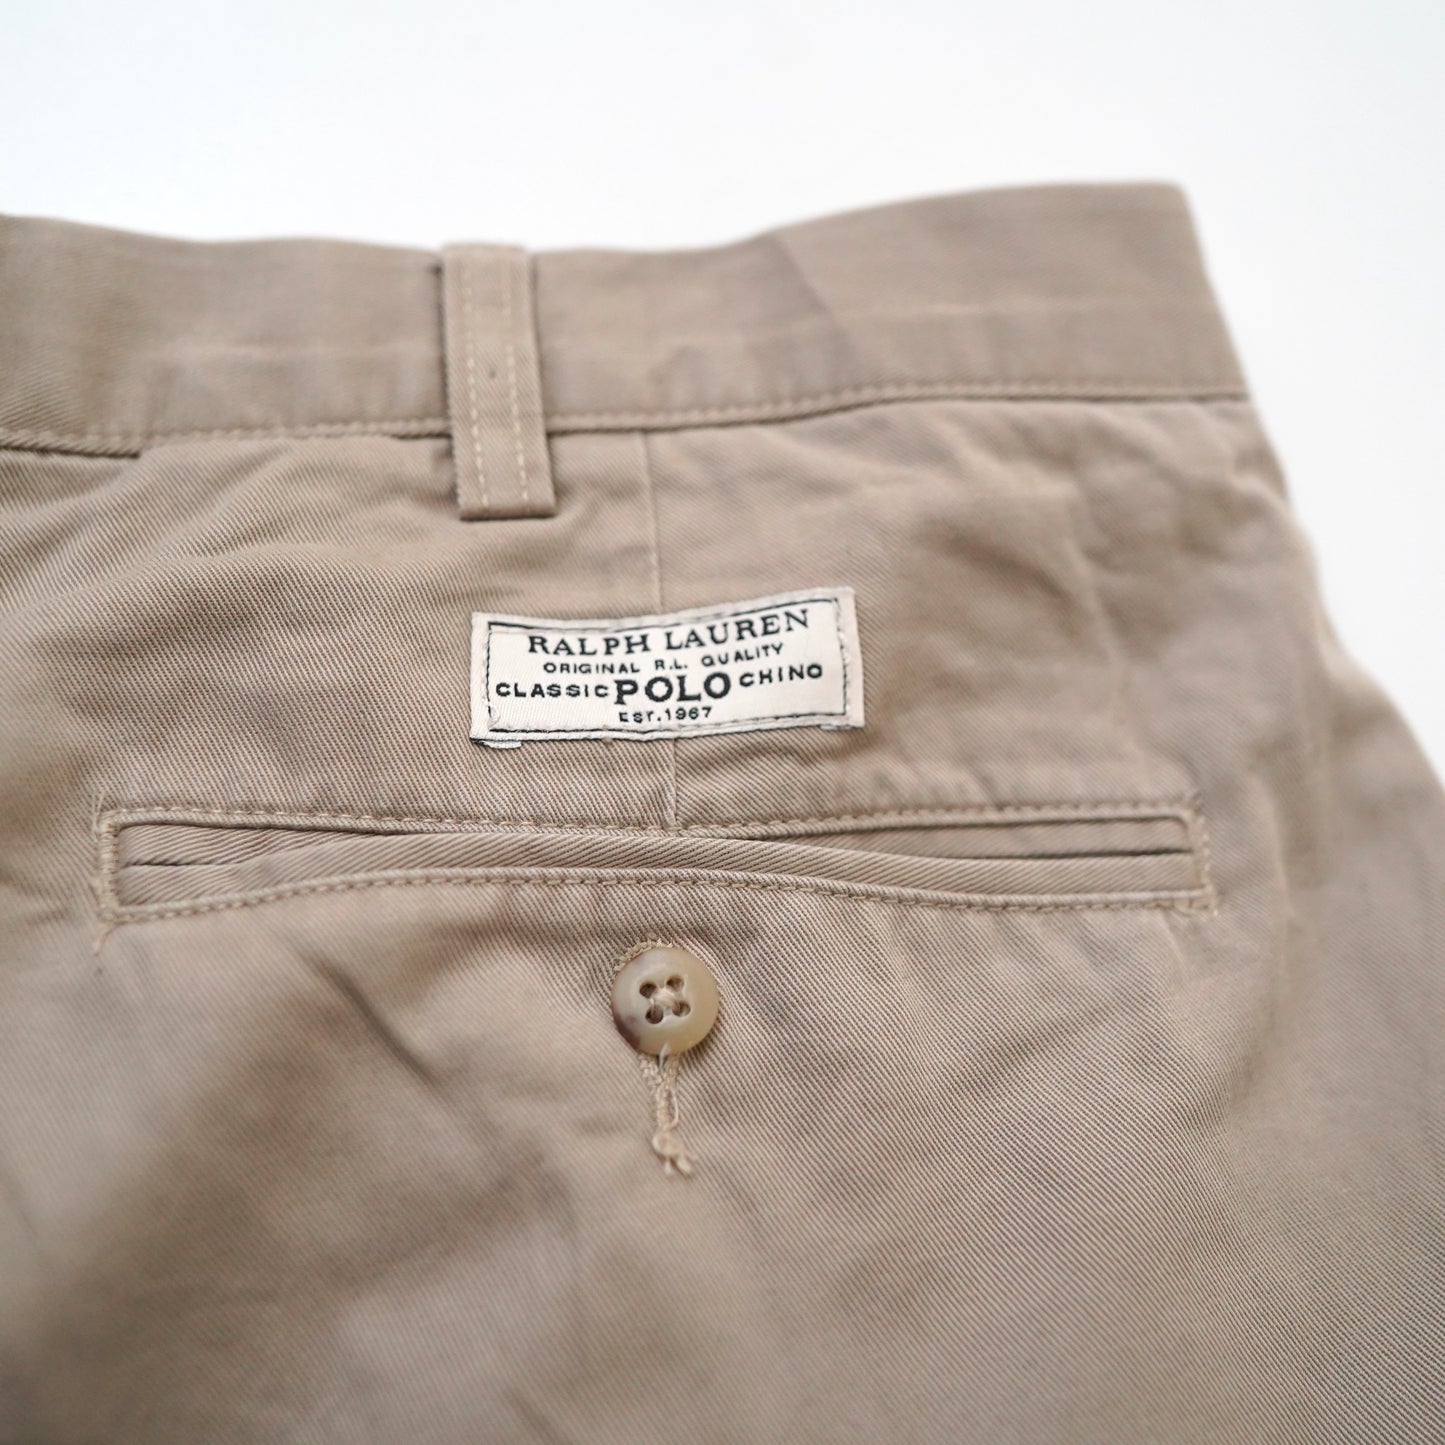 Polo by Ralph Lauren pants